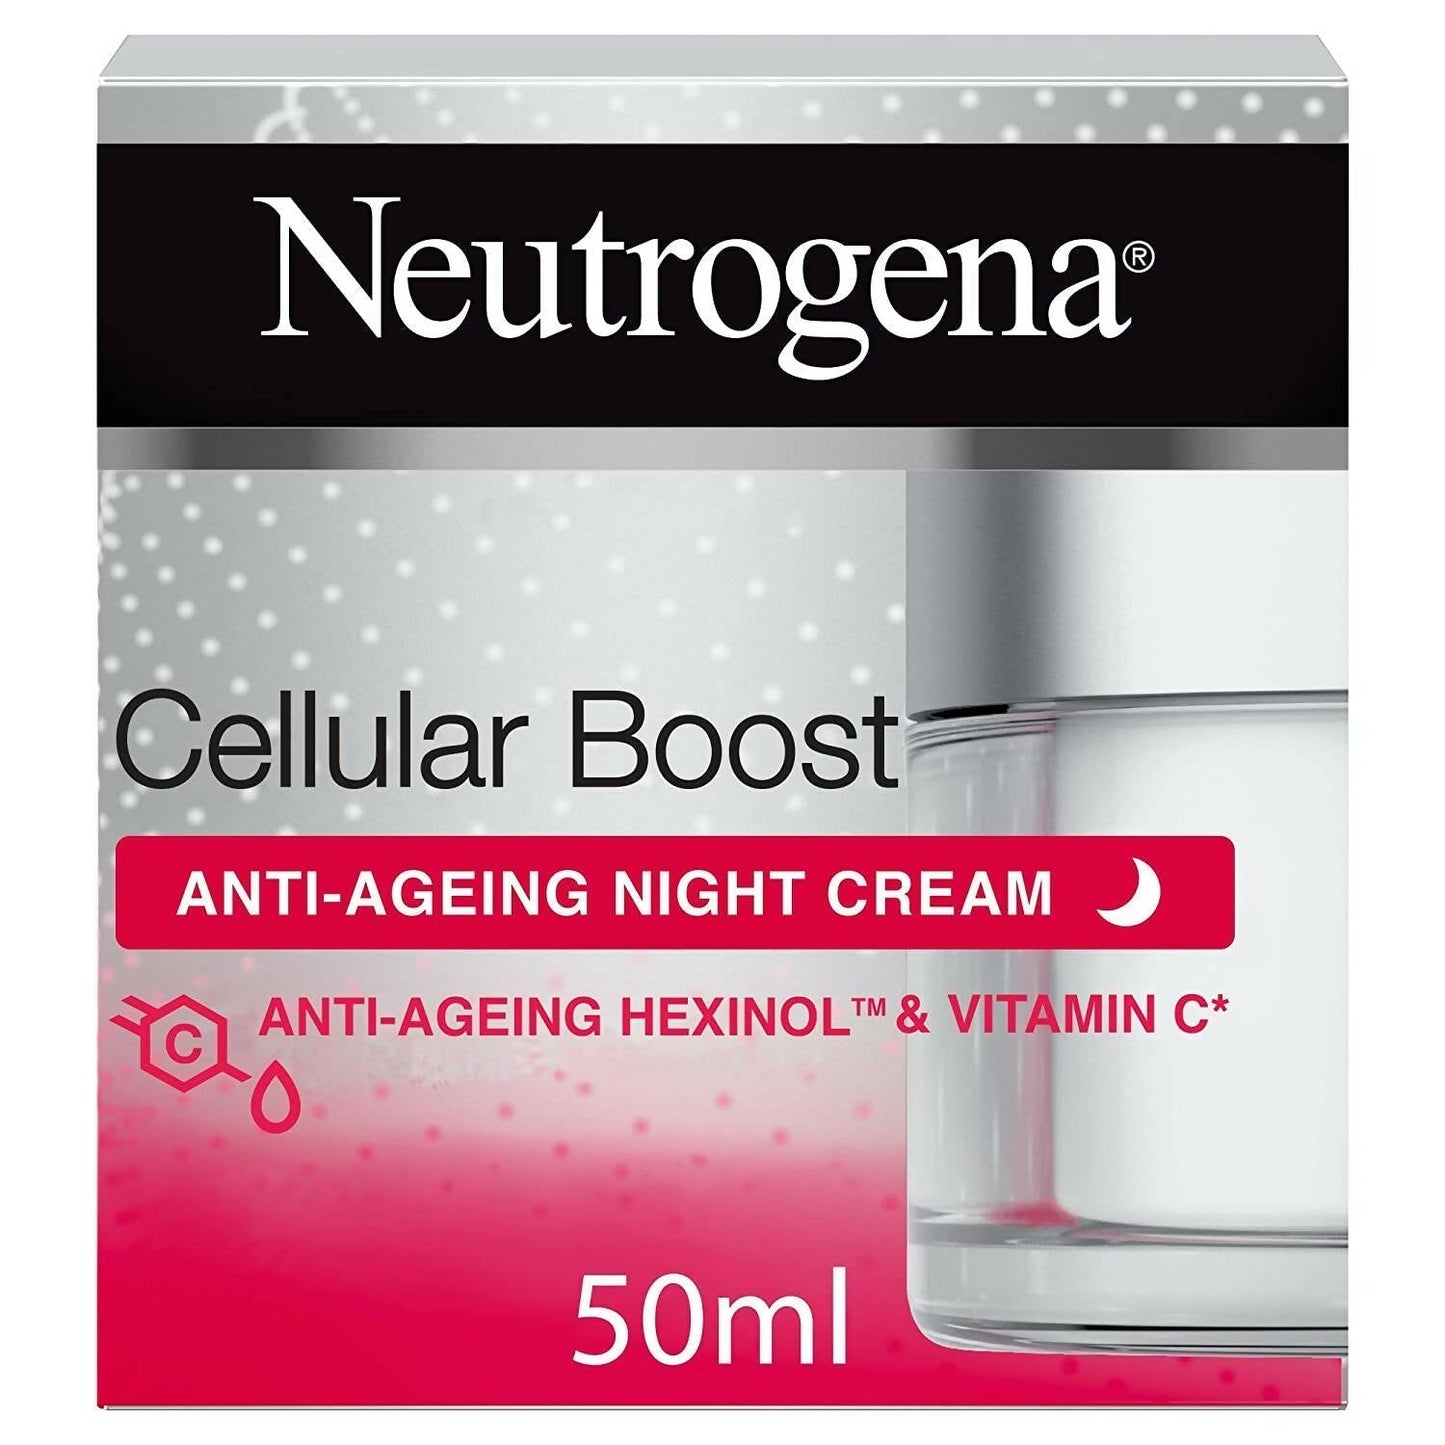 Neutrogena Cellular Boost Anti-Aging Night Cream